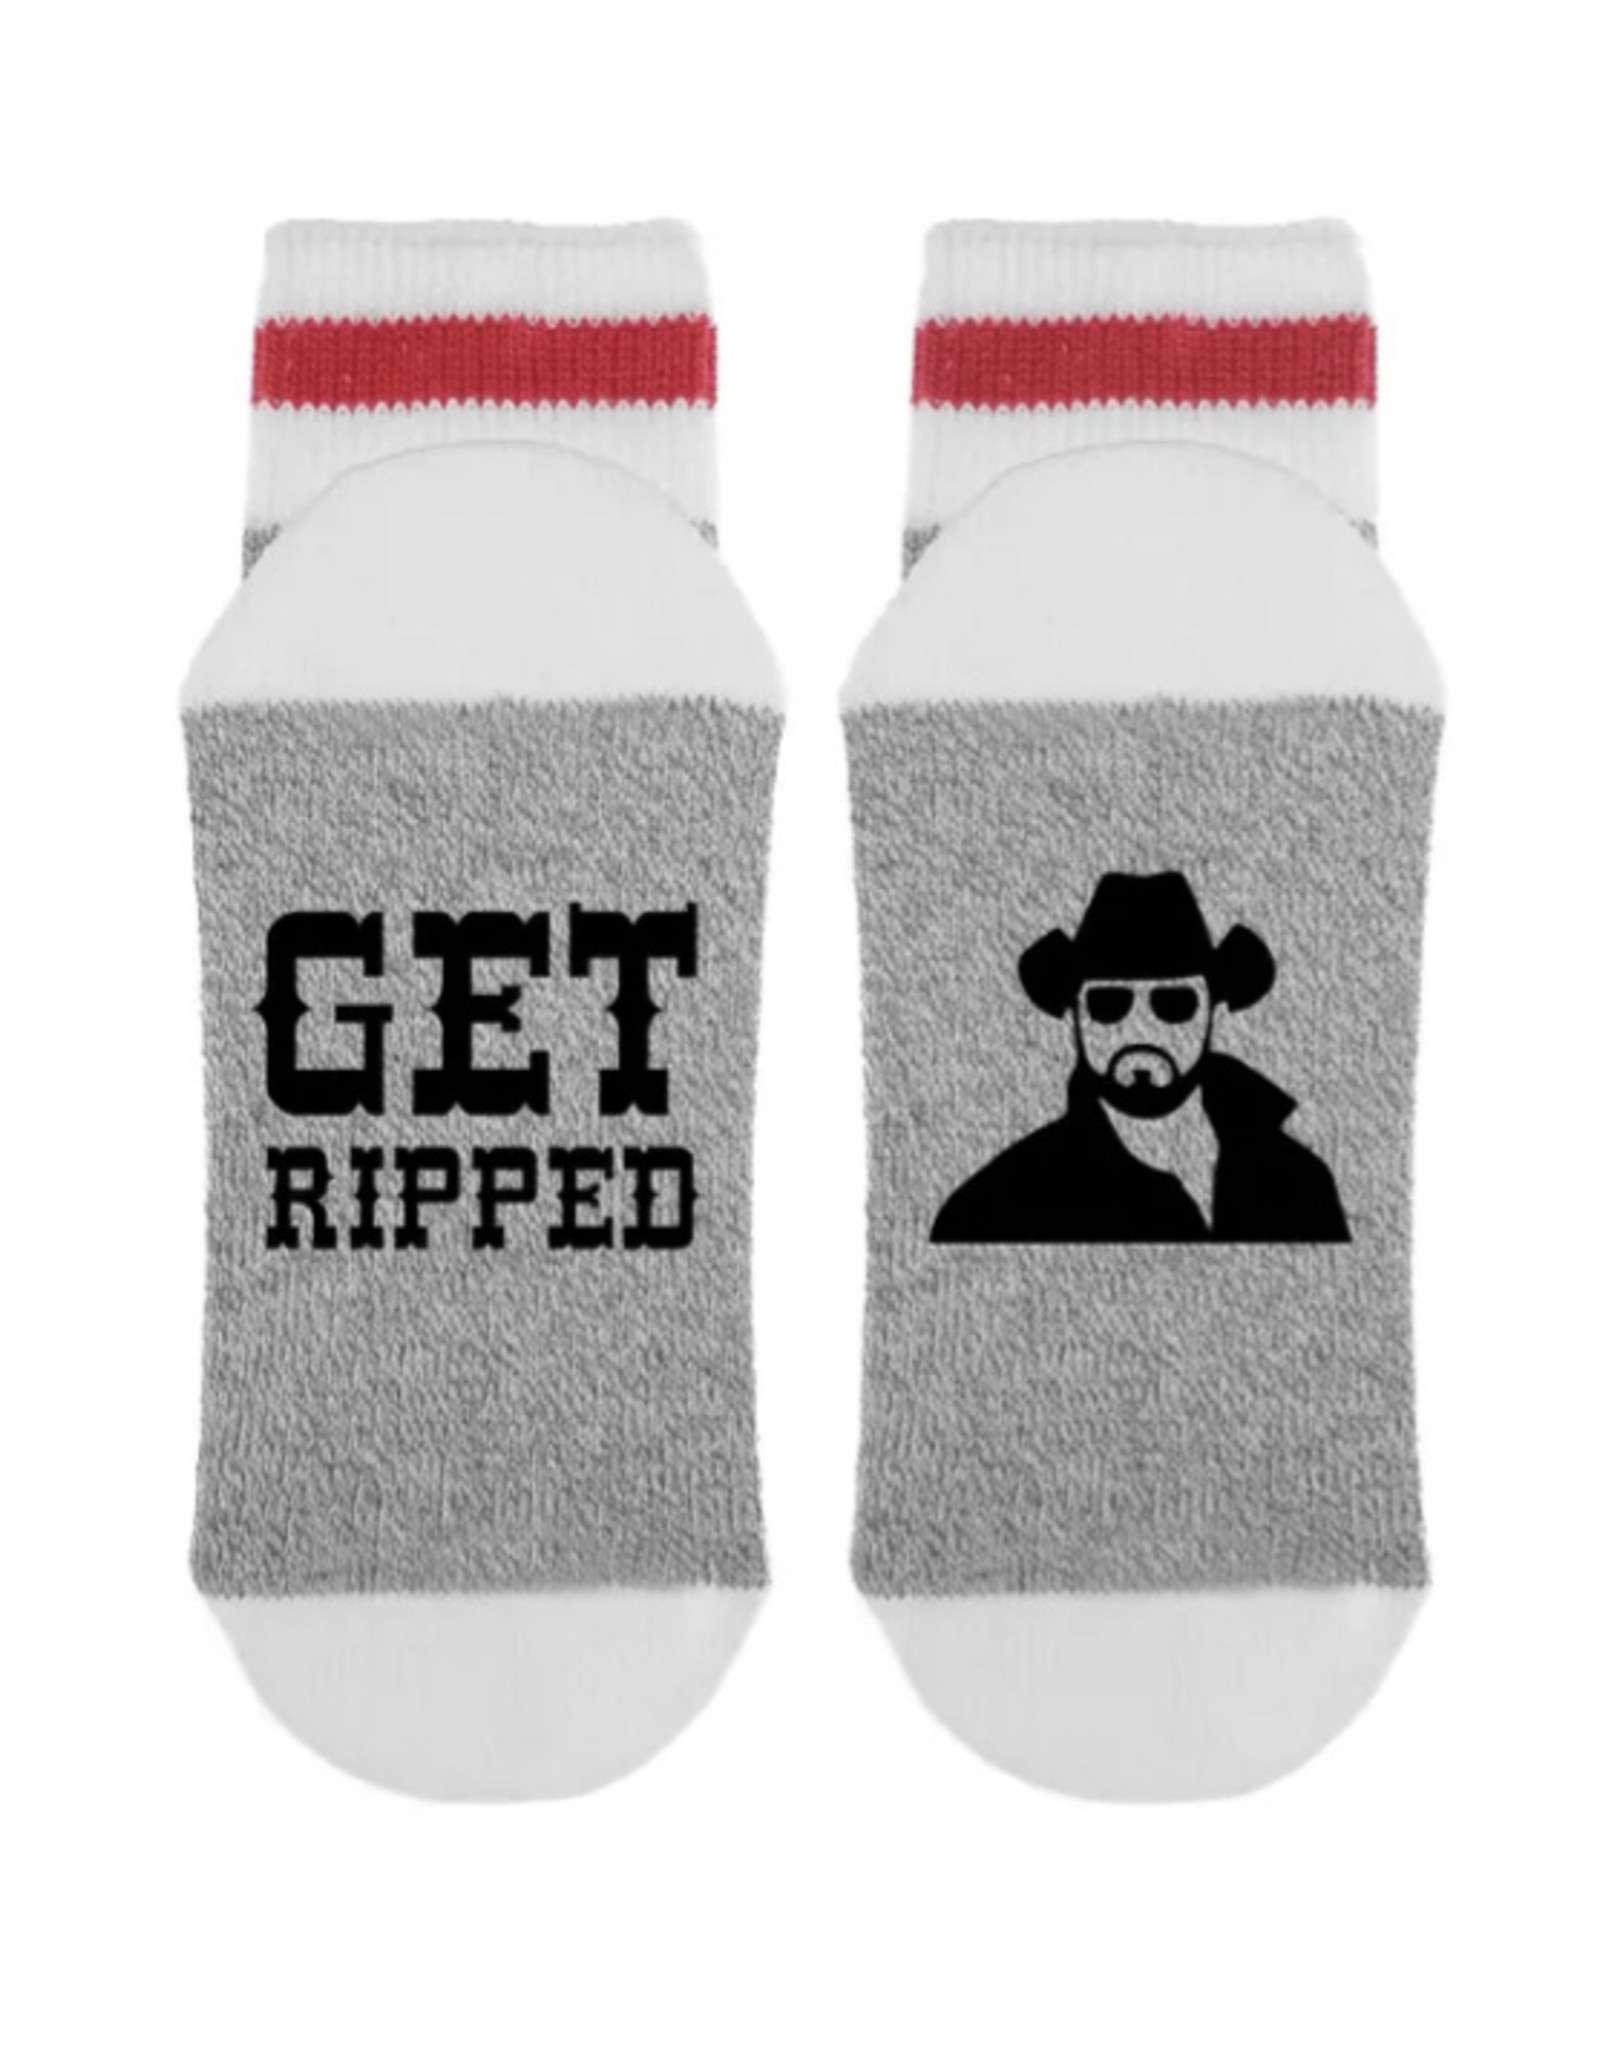 Get Ripped Socks